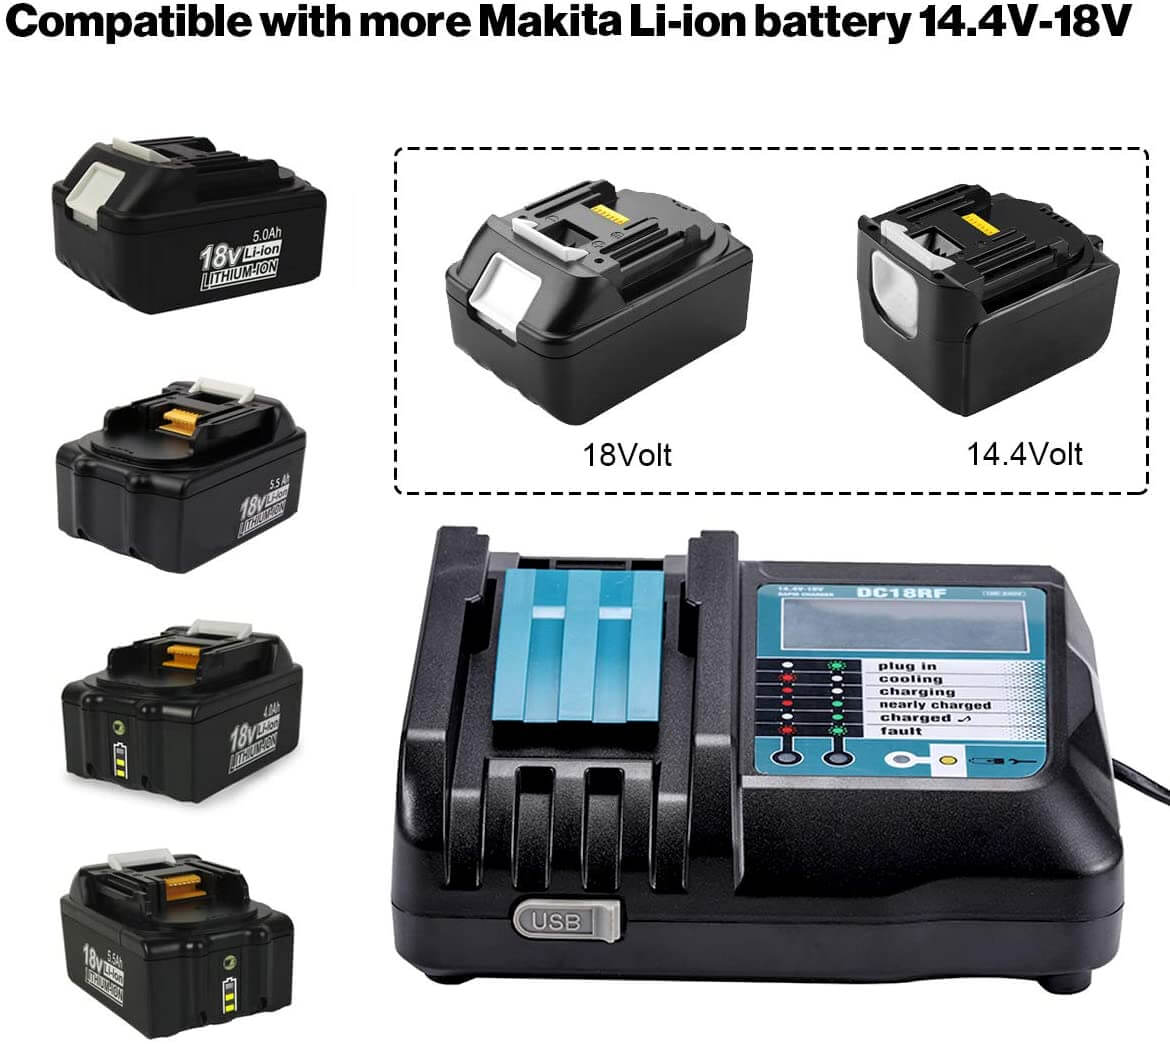 2BL1860 7.0A+DC18RF 3.5A Li-Ion Ersatz Ladegerät für Makita 14.4V-18V akku Ladegeräte - Dasbatteries